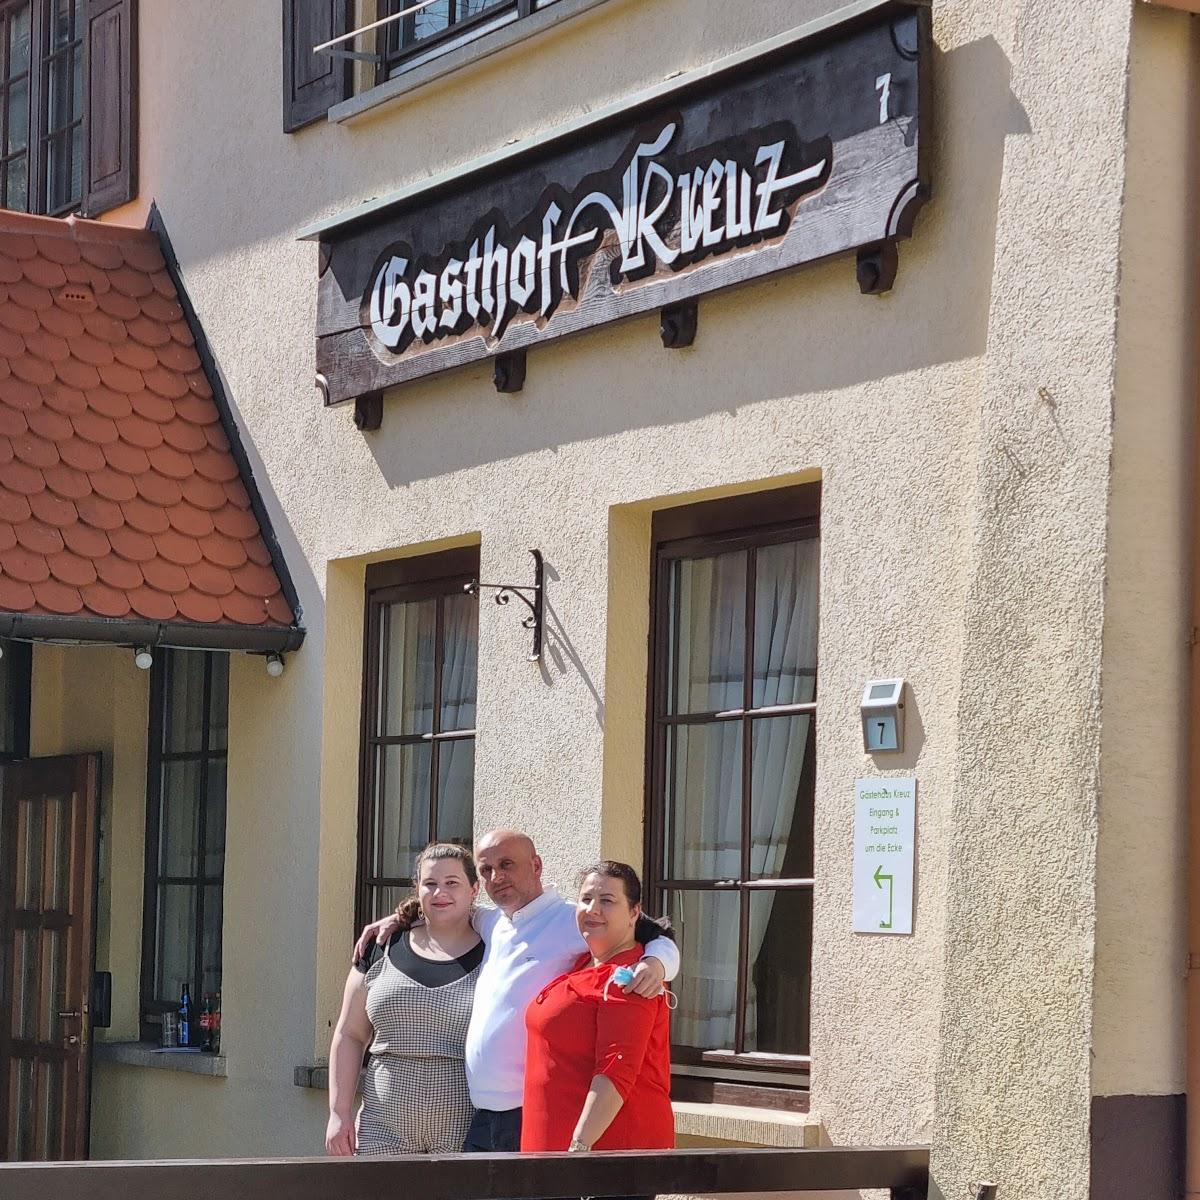 Restaurant "Gasthof Kreuz" in Tuningen